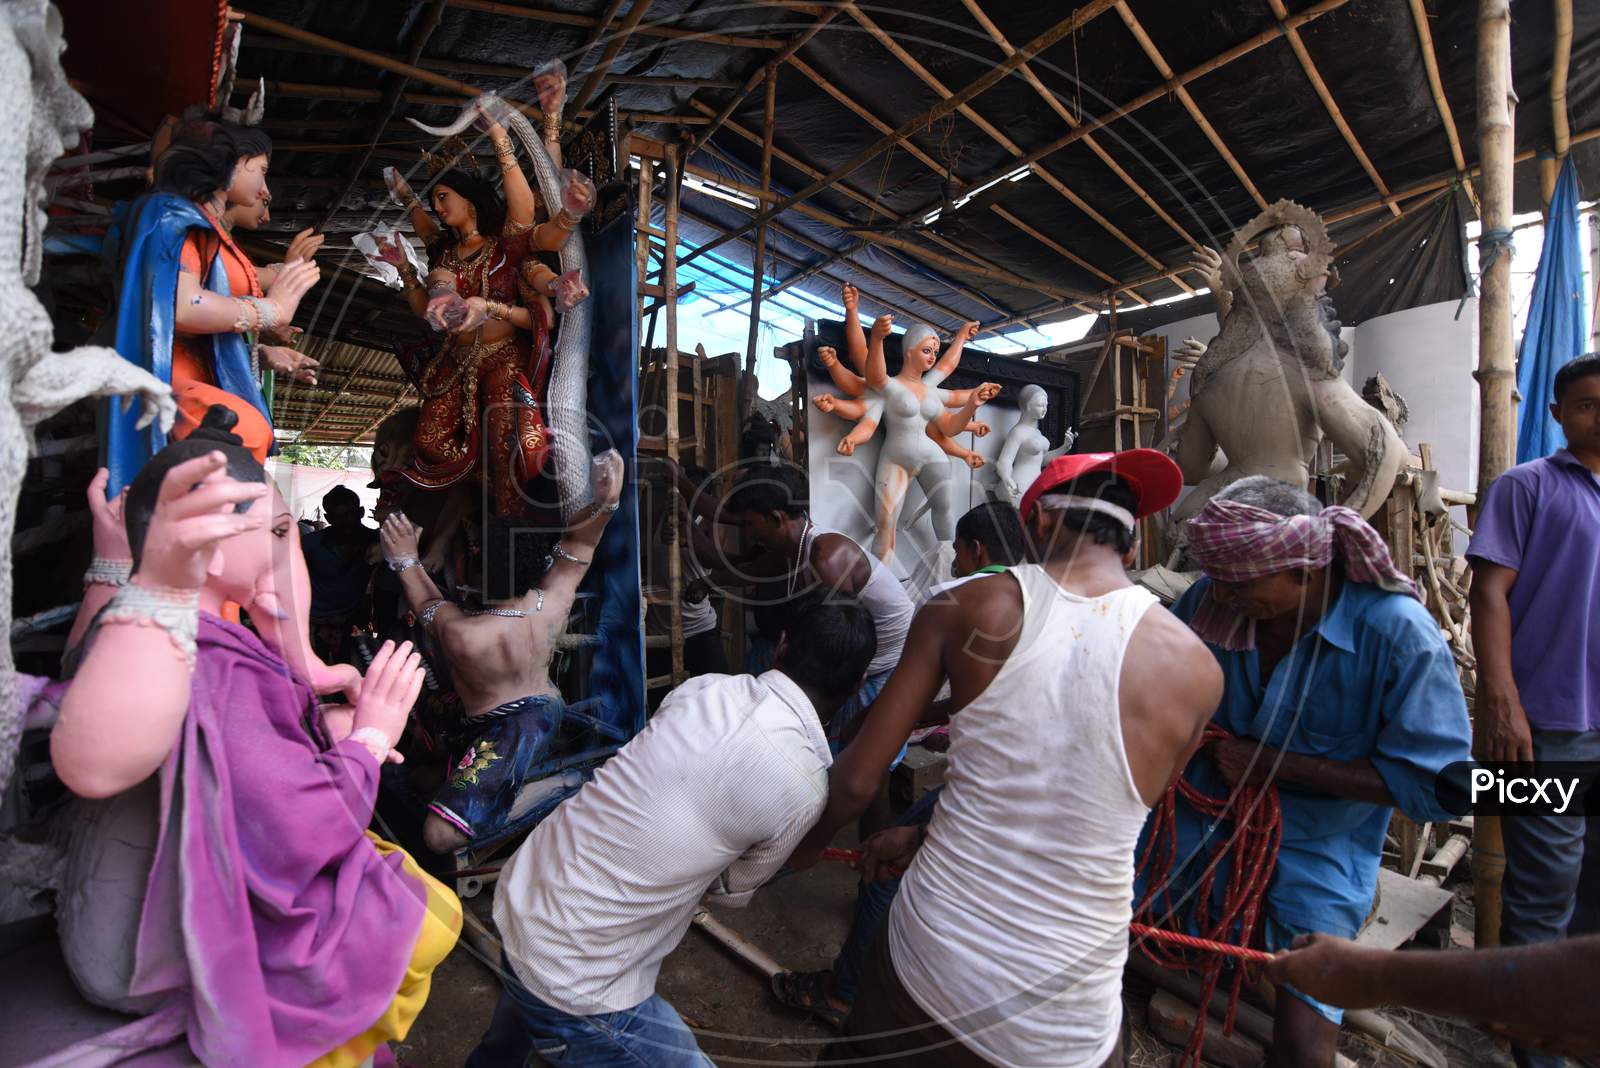 Durga Idols In Making In Workshops For Dussera Or Durga Navratri Festival Celebrations in Guwahati , Assam